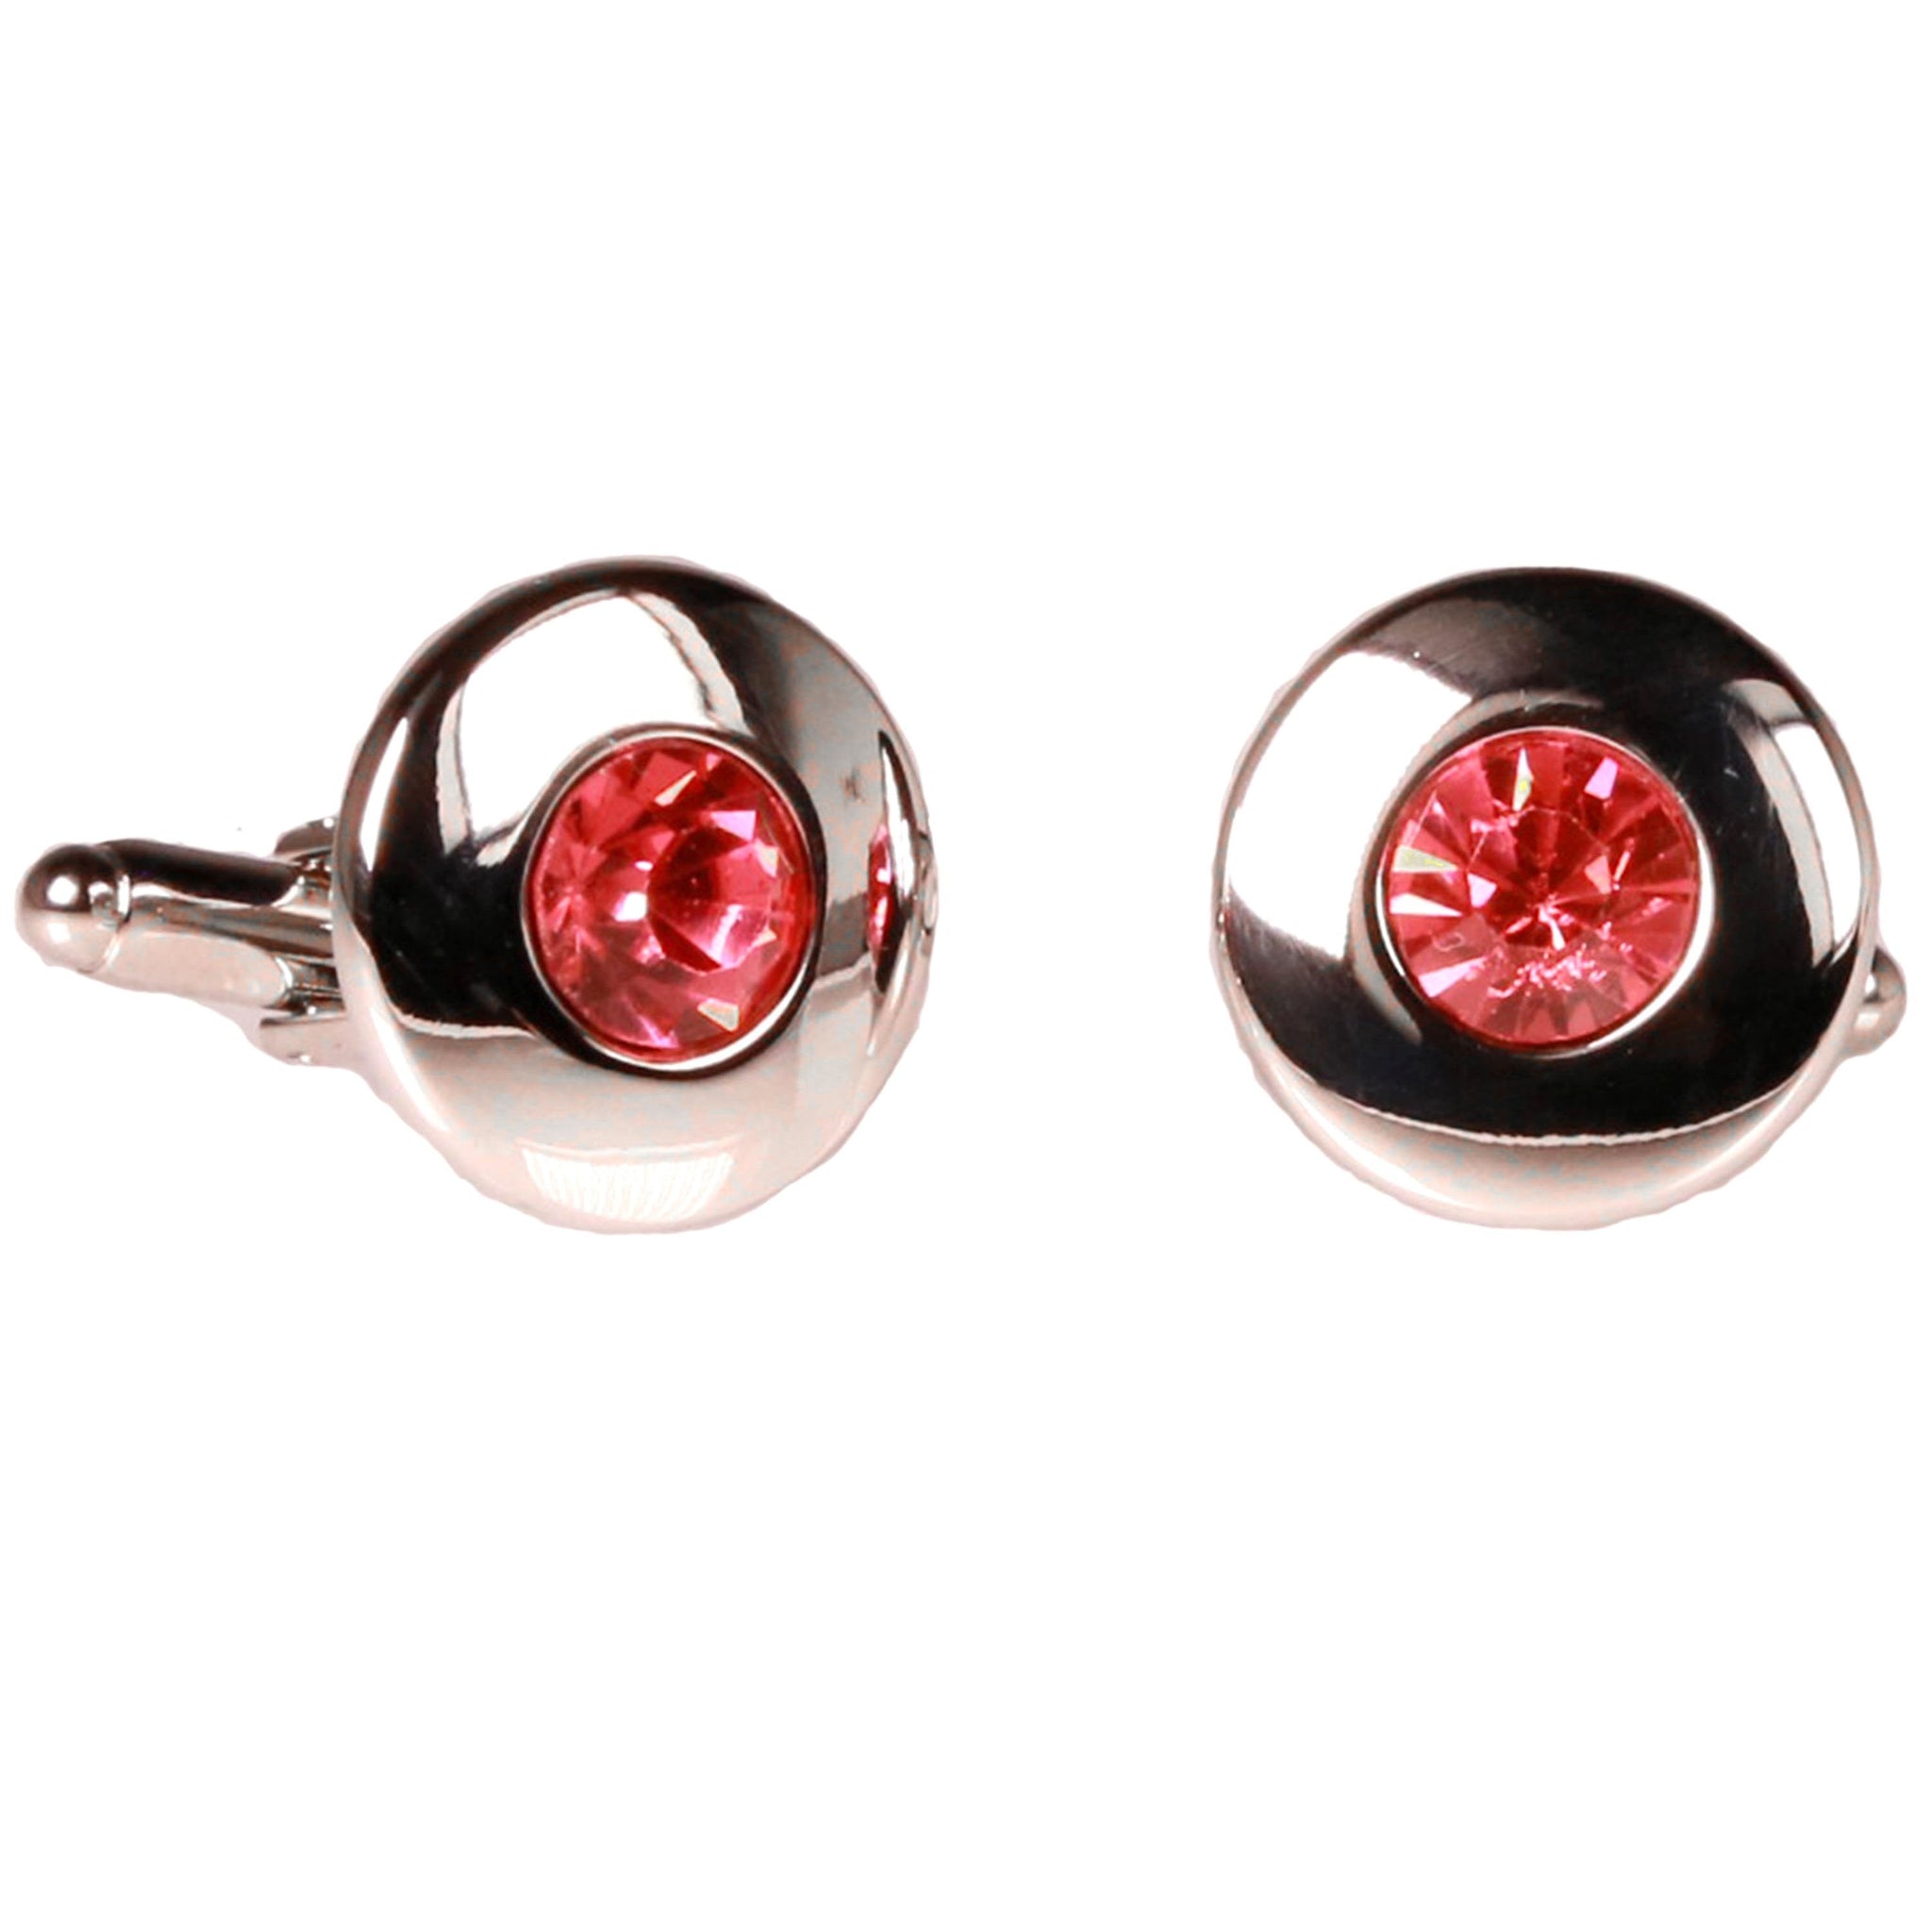 Silvertone Circle Pink Gemstone Cufflinks with Jewelry Box